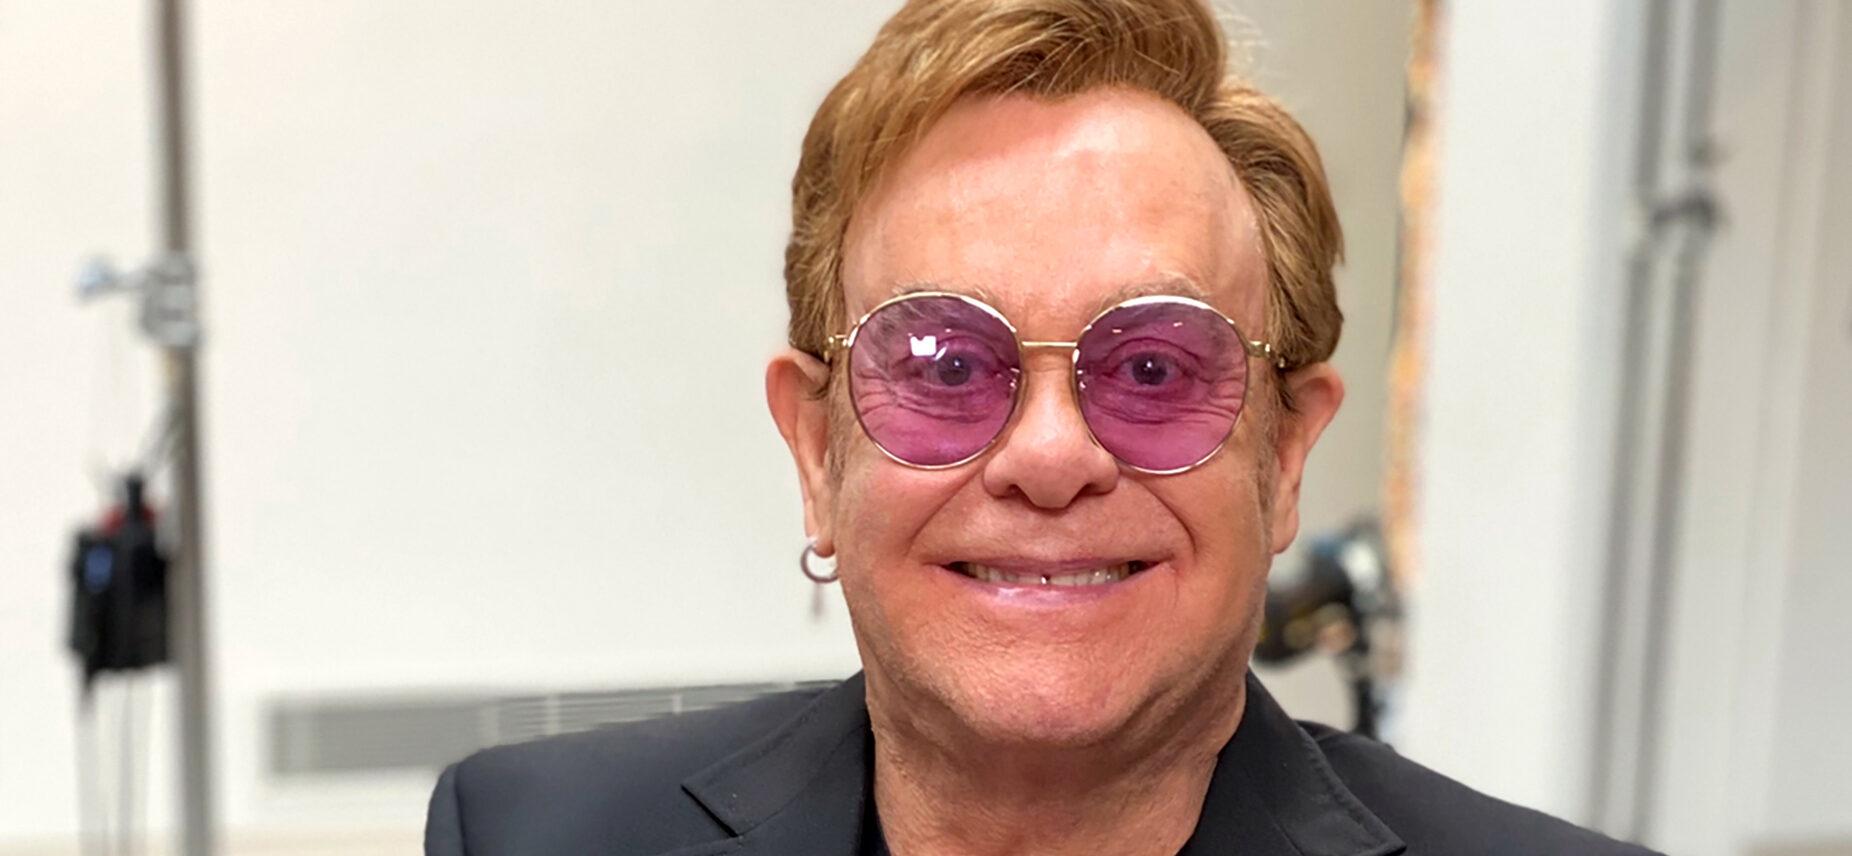 Elton John Obtains Rare EGOT Status After Missing The Emmys Over Knee Surgery